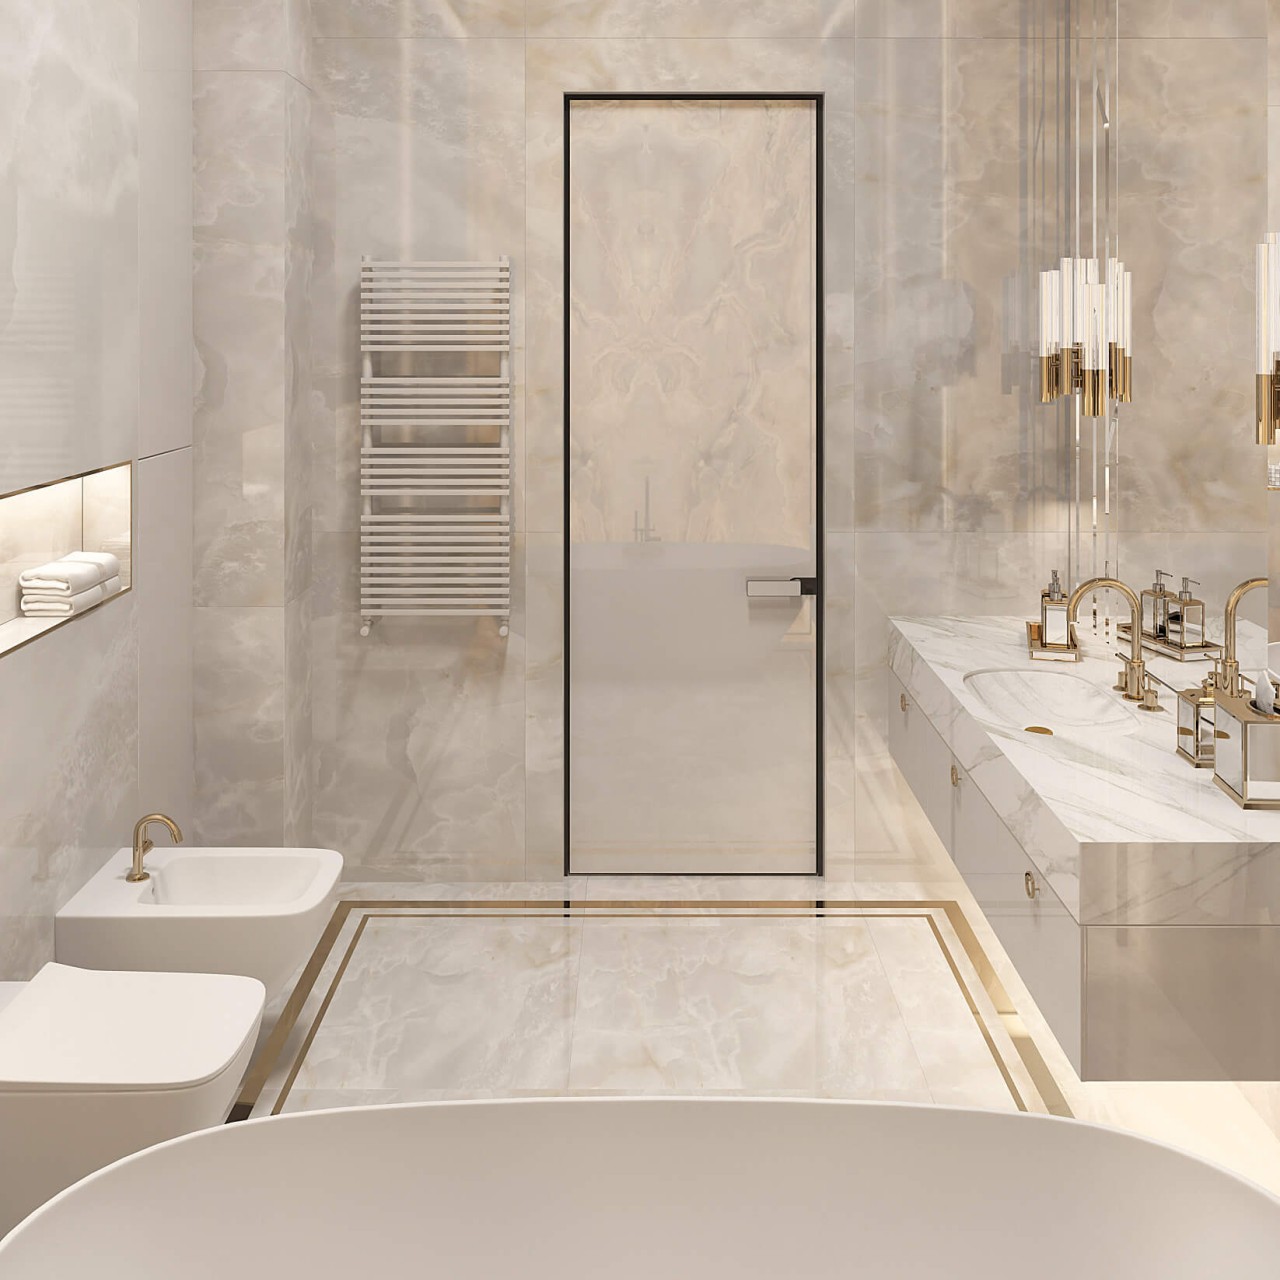 Laidback Luxury: Bathroom Designs of LA - Inside Design Tile